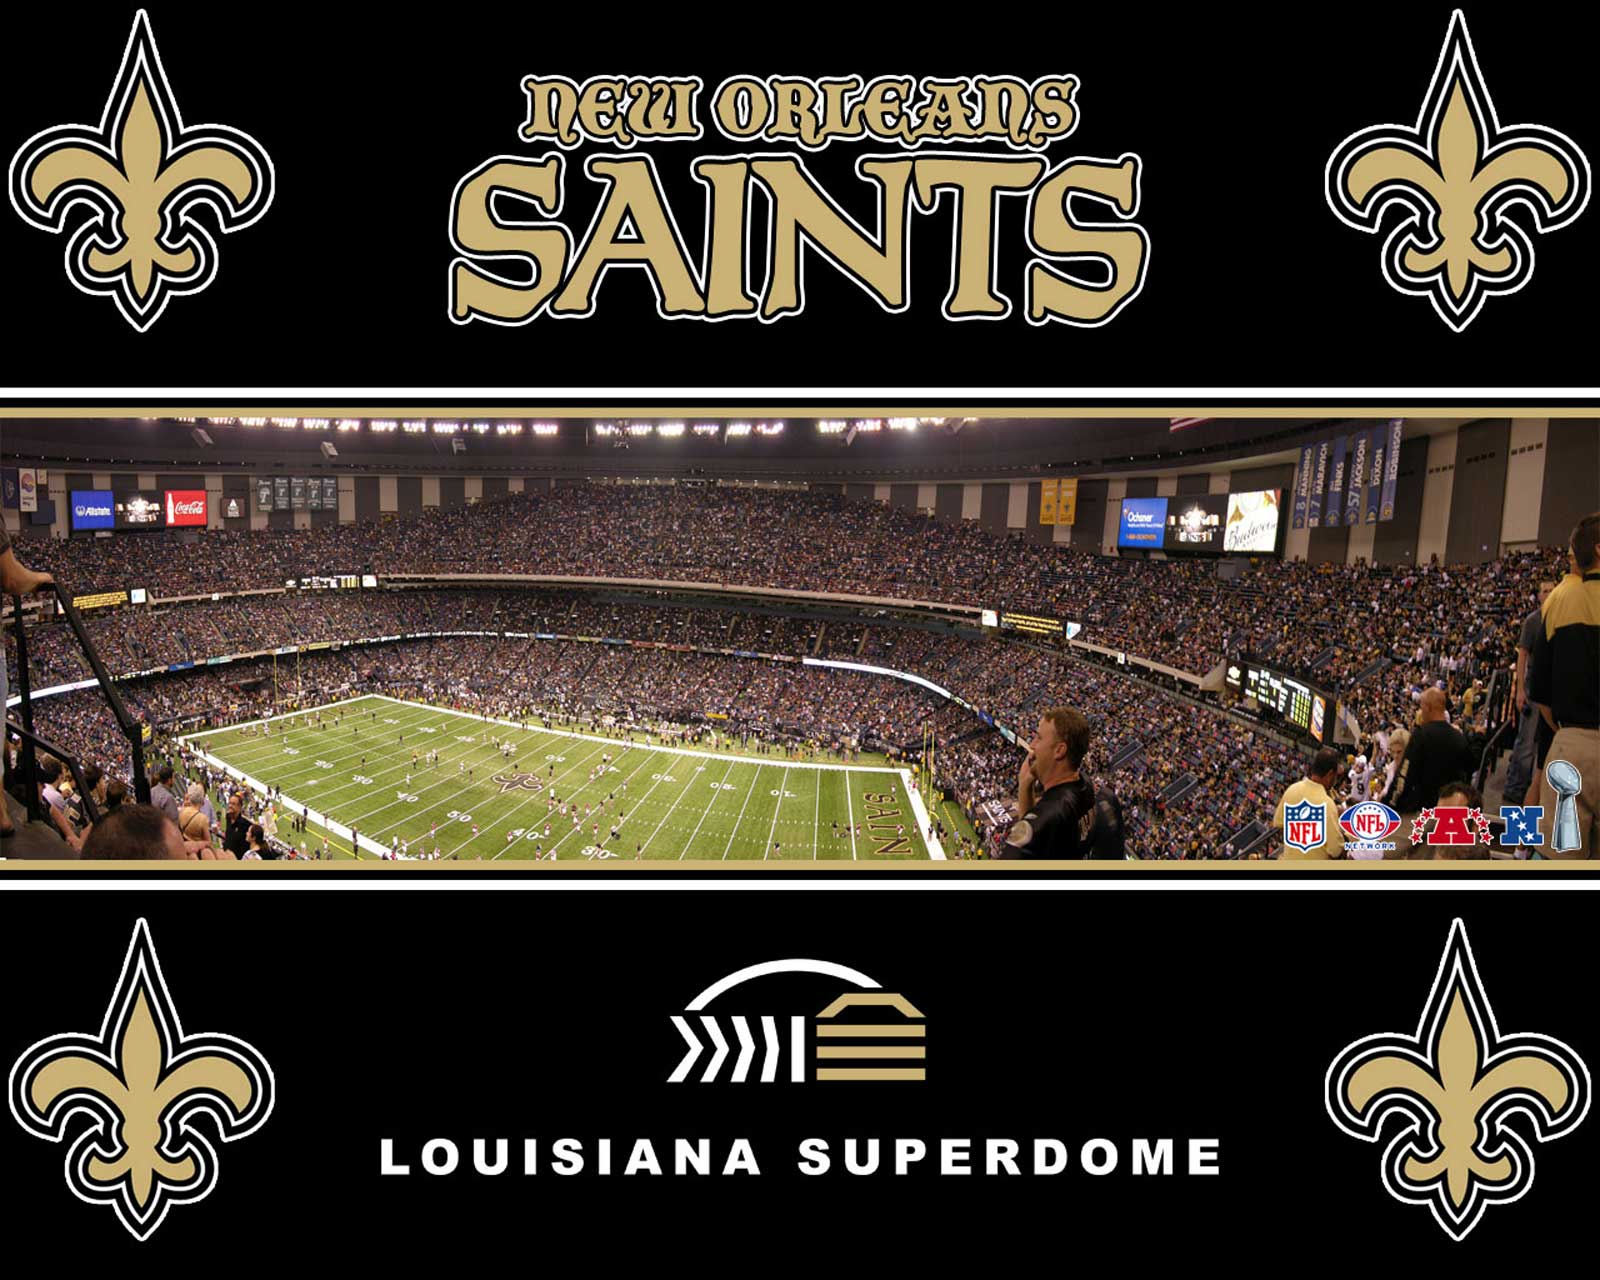 New Orleans Saints wallpaper HD image. New Orleans Saints wallpaper